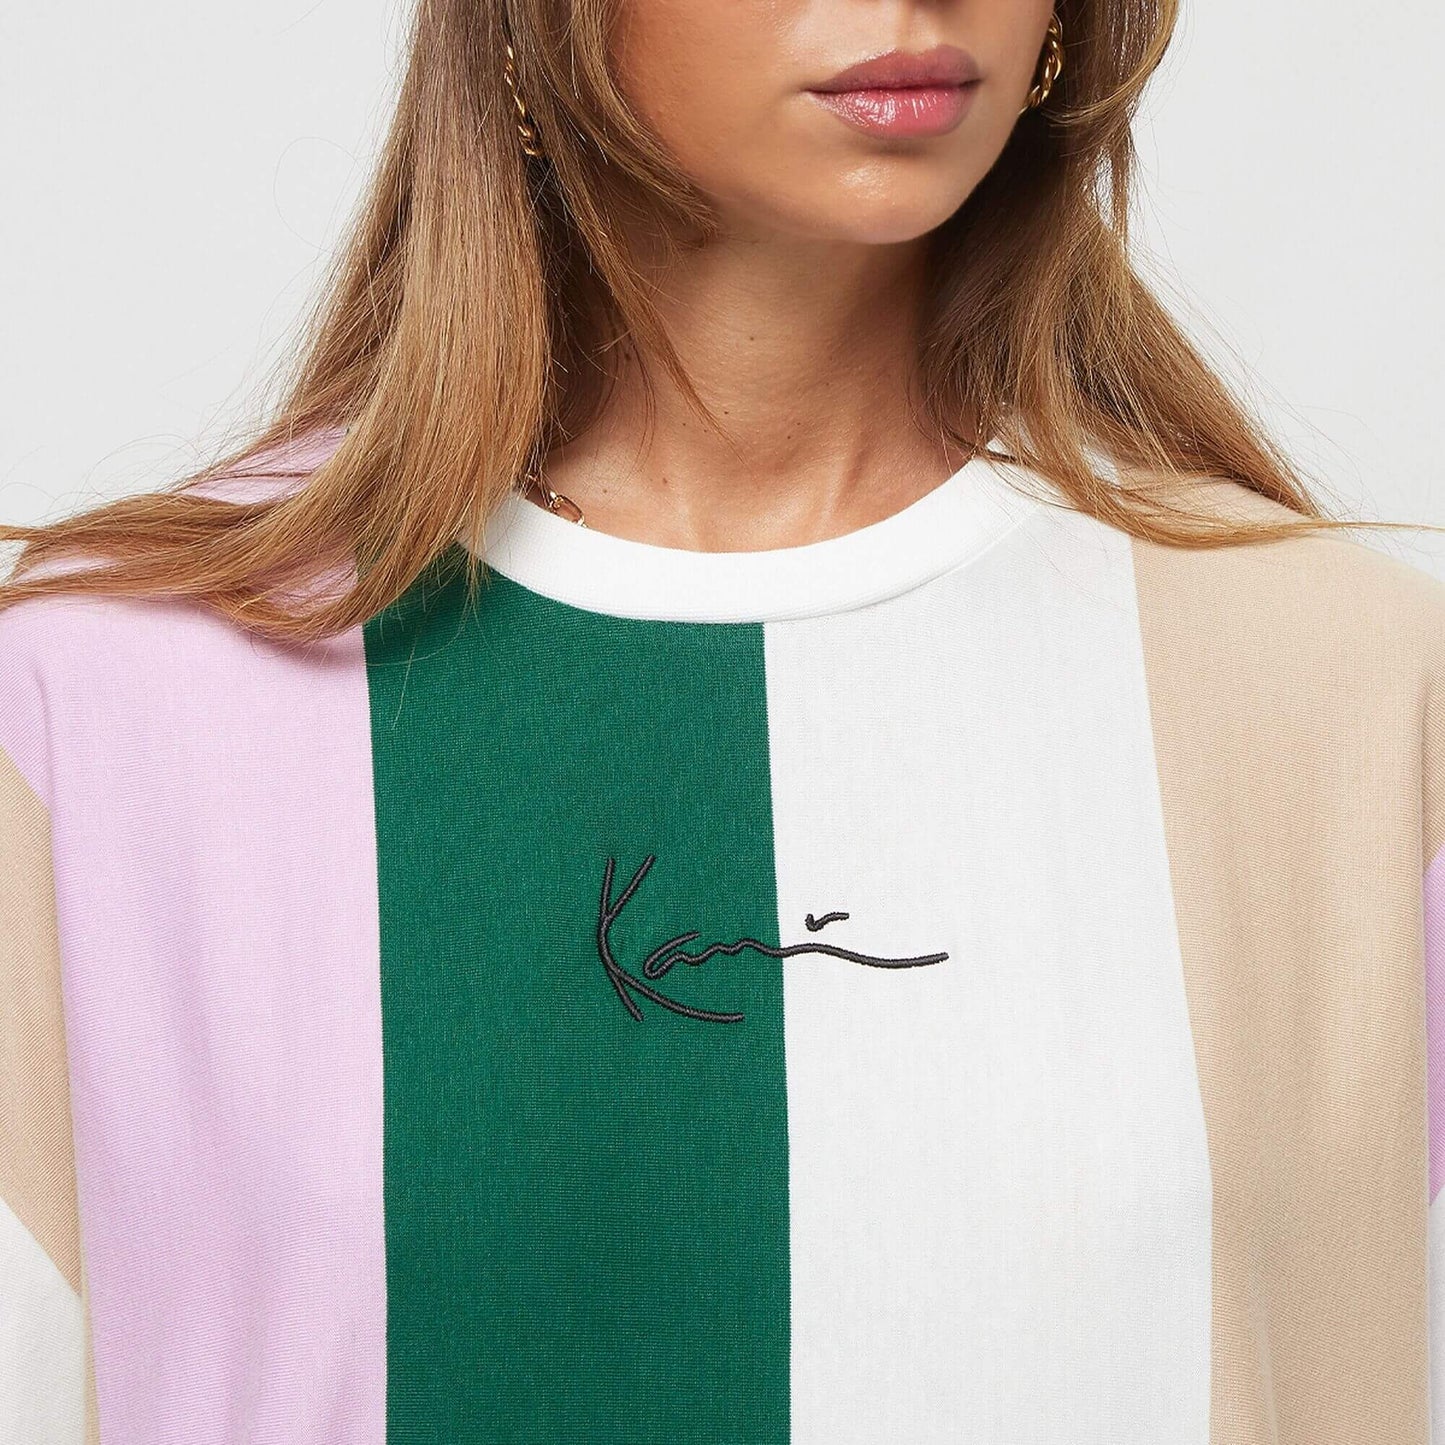 Karl Kani KK Small Signature Striped Tee Dress pink/ dark green/white